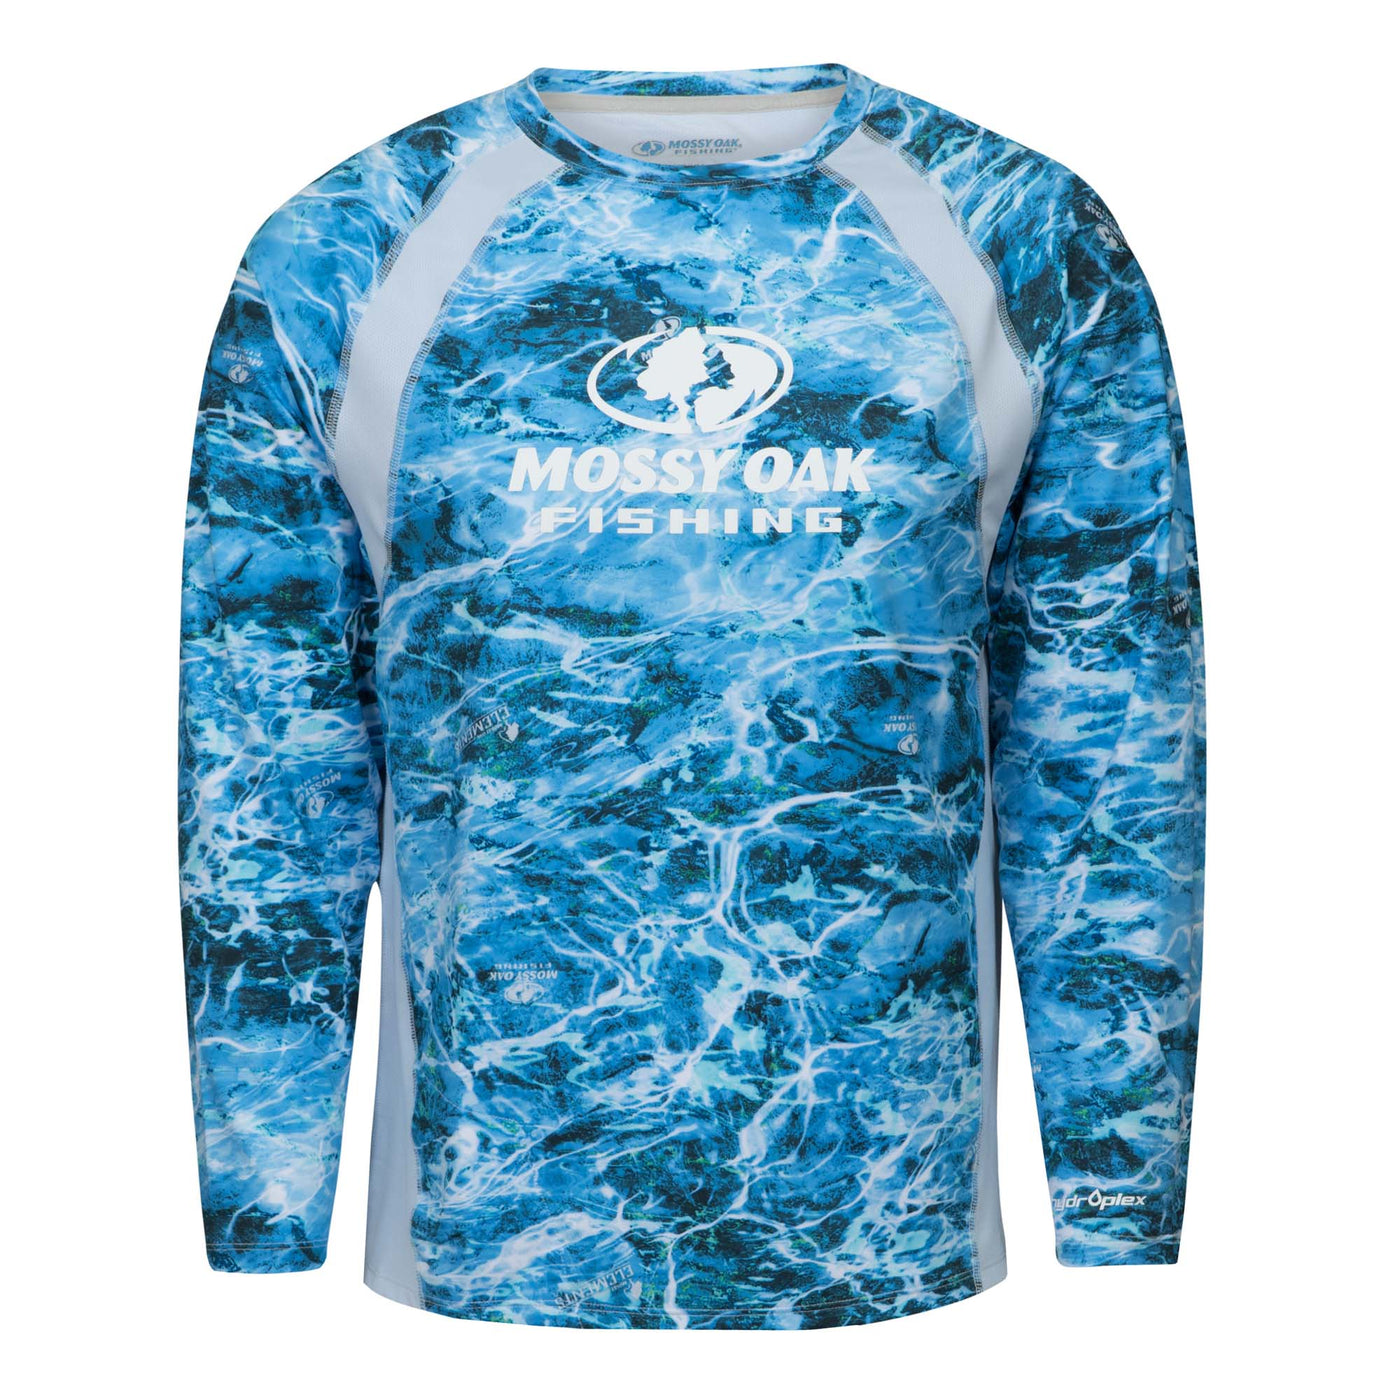 Mossy Oak Fishing Shirt Long Sleeve Blue Camo 2FER TEE WITH GAITER